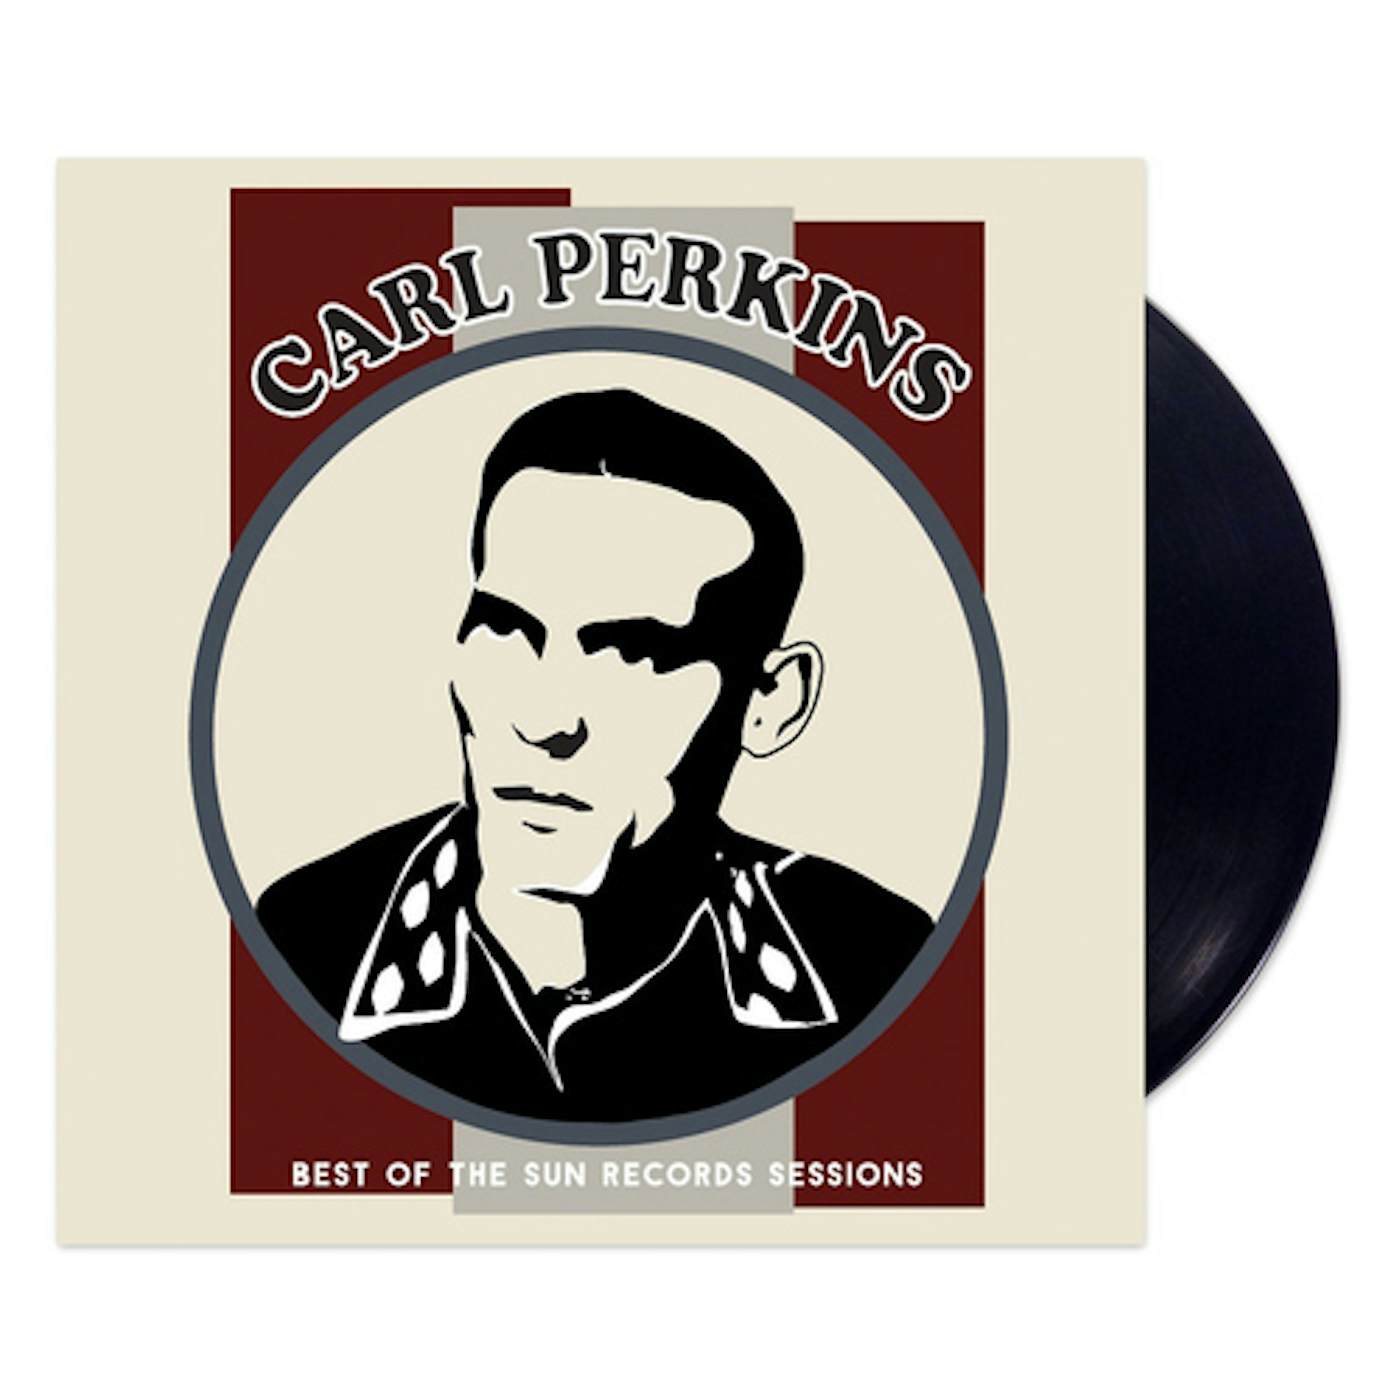 Carl Perkins - Best of the Sun Records Sessions LP (Vinyl)